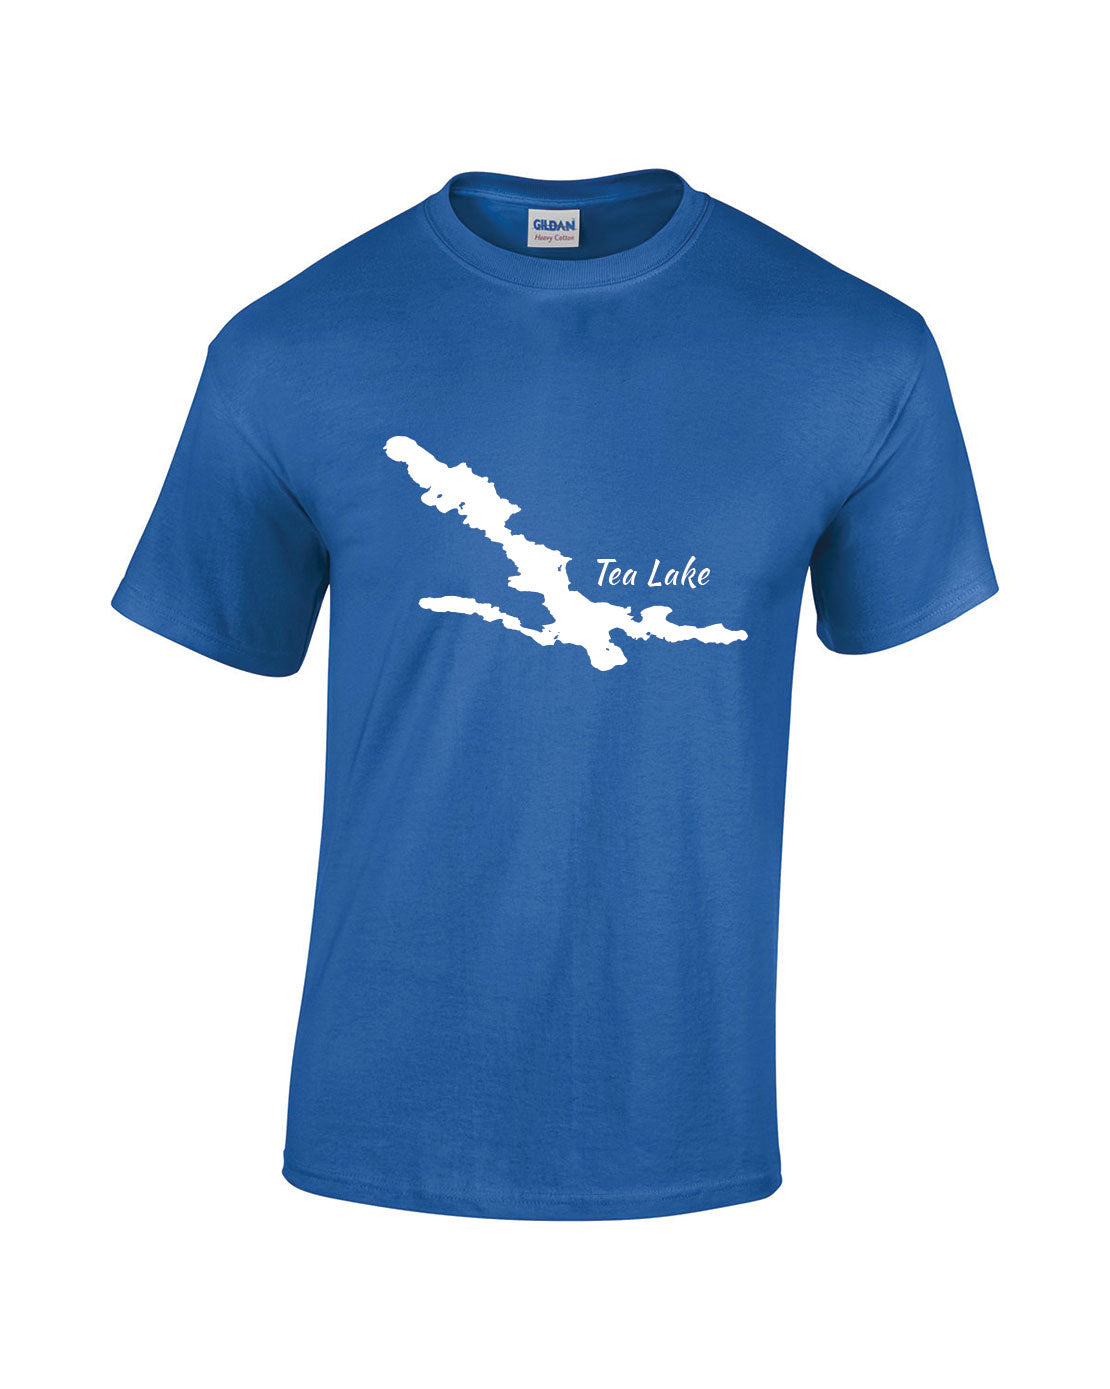 Tea Lake T-Shirt